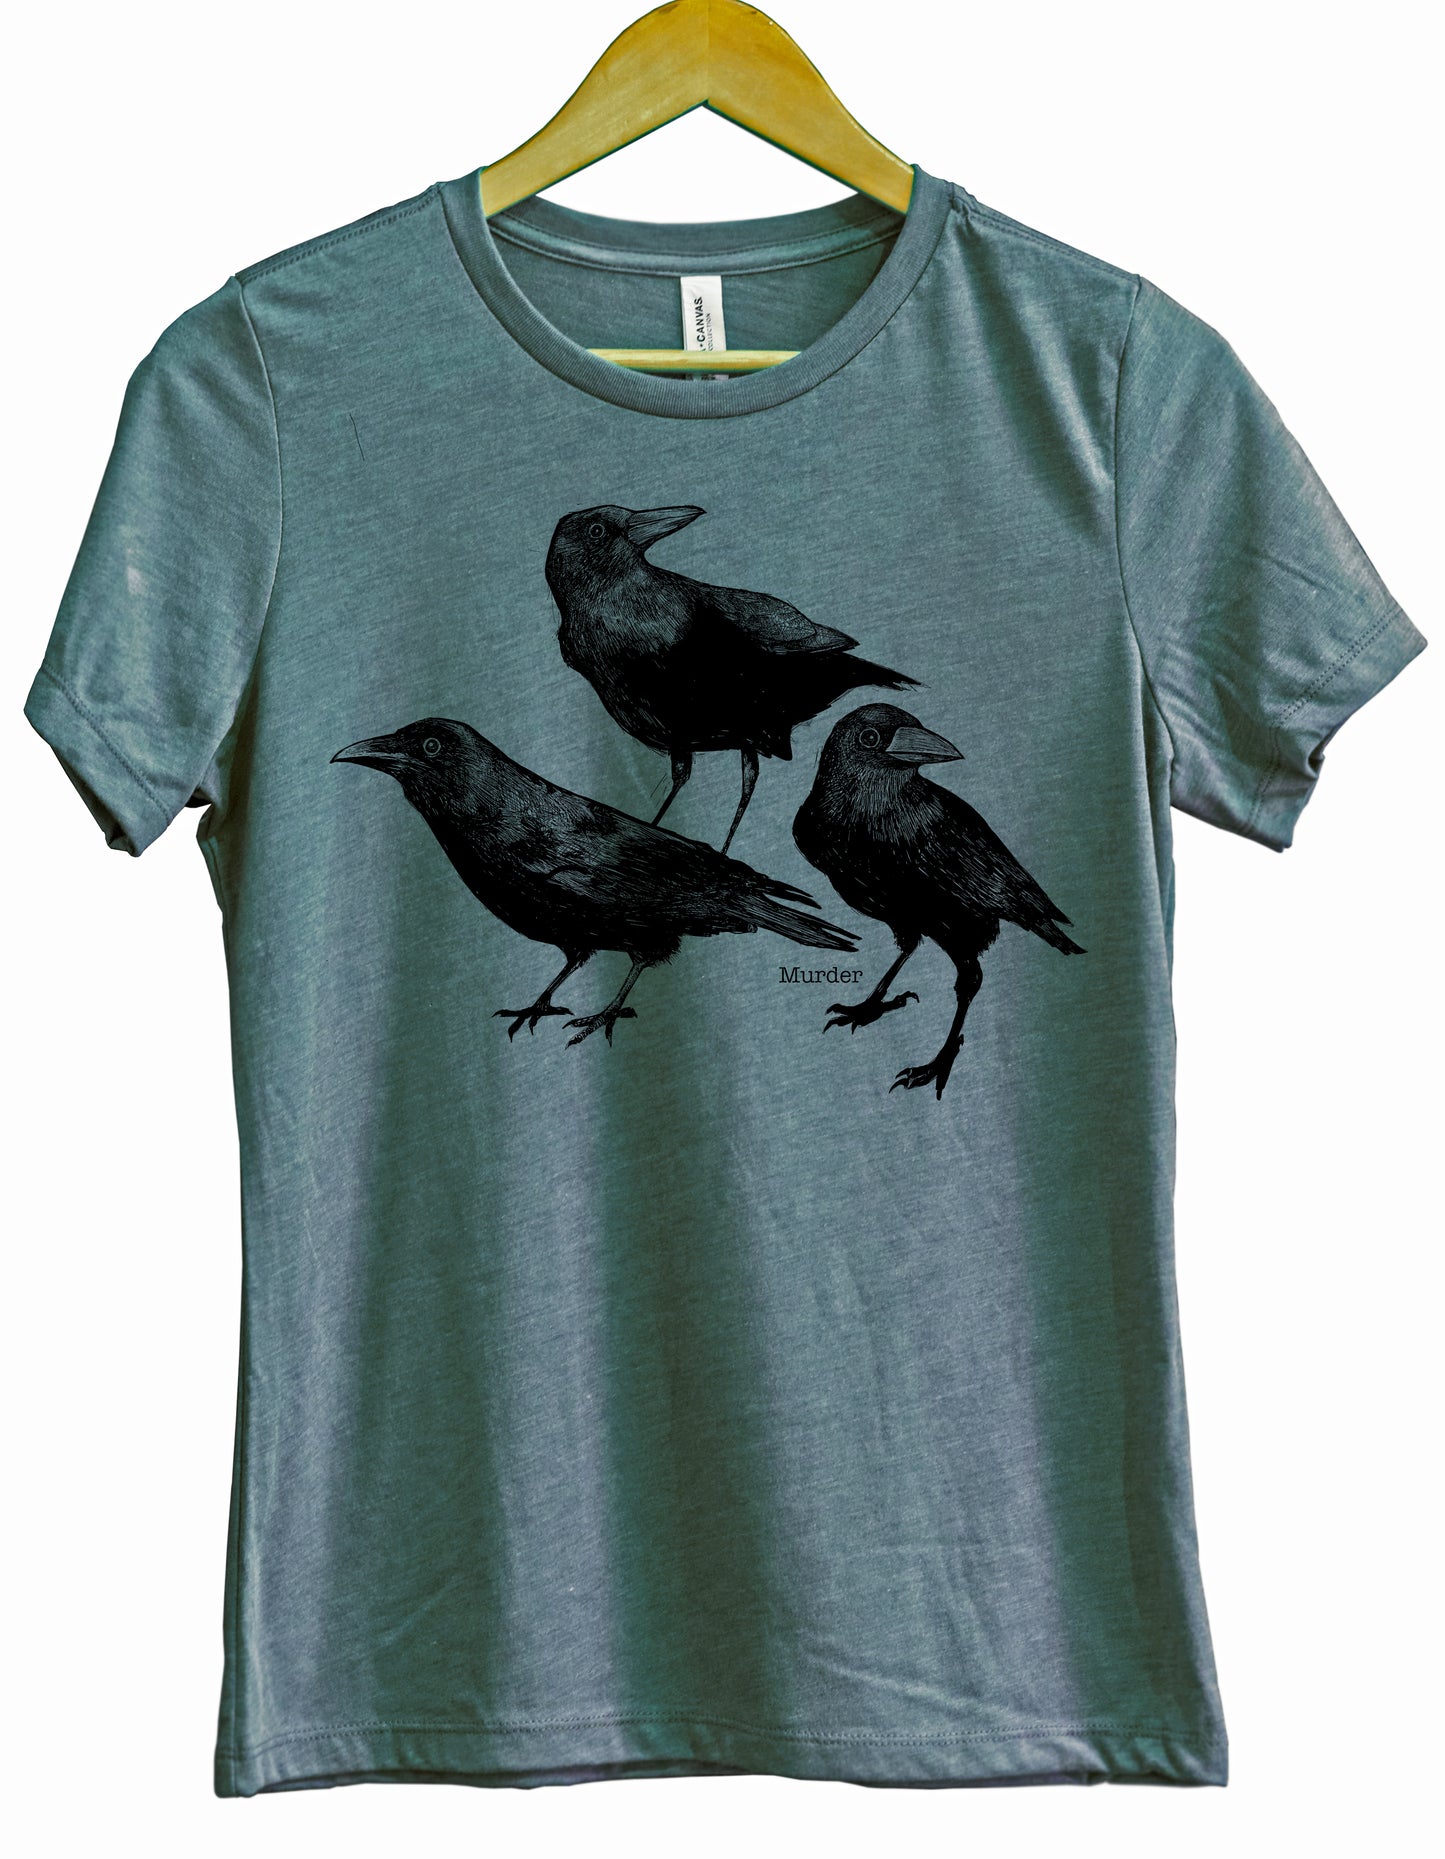 Murder of Crows - Women's Graphic Tee